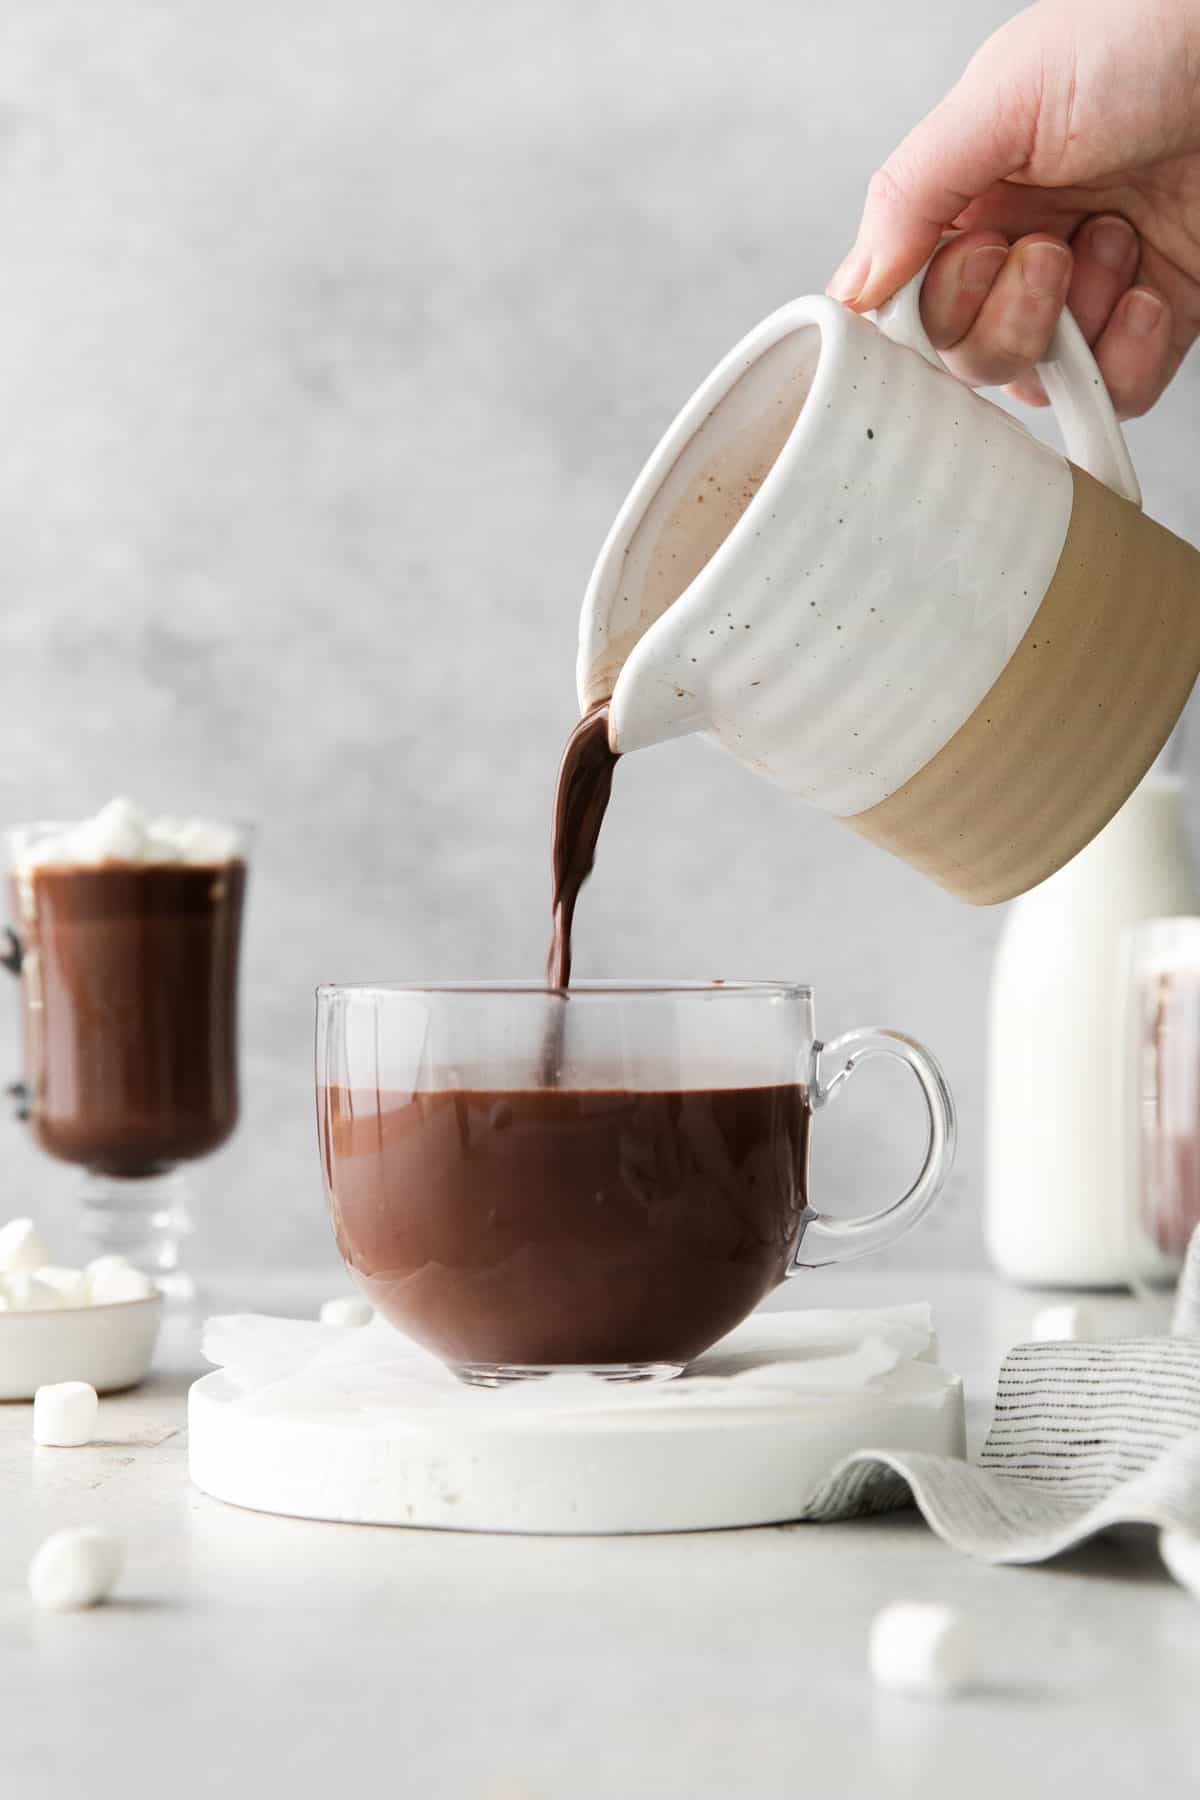 A hand pouring hot chocolate into a glass mug